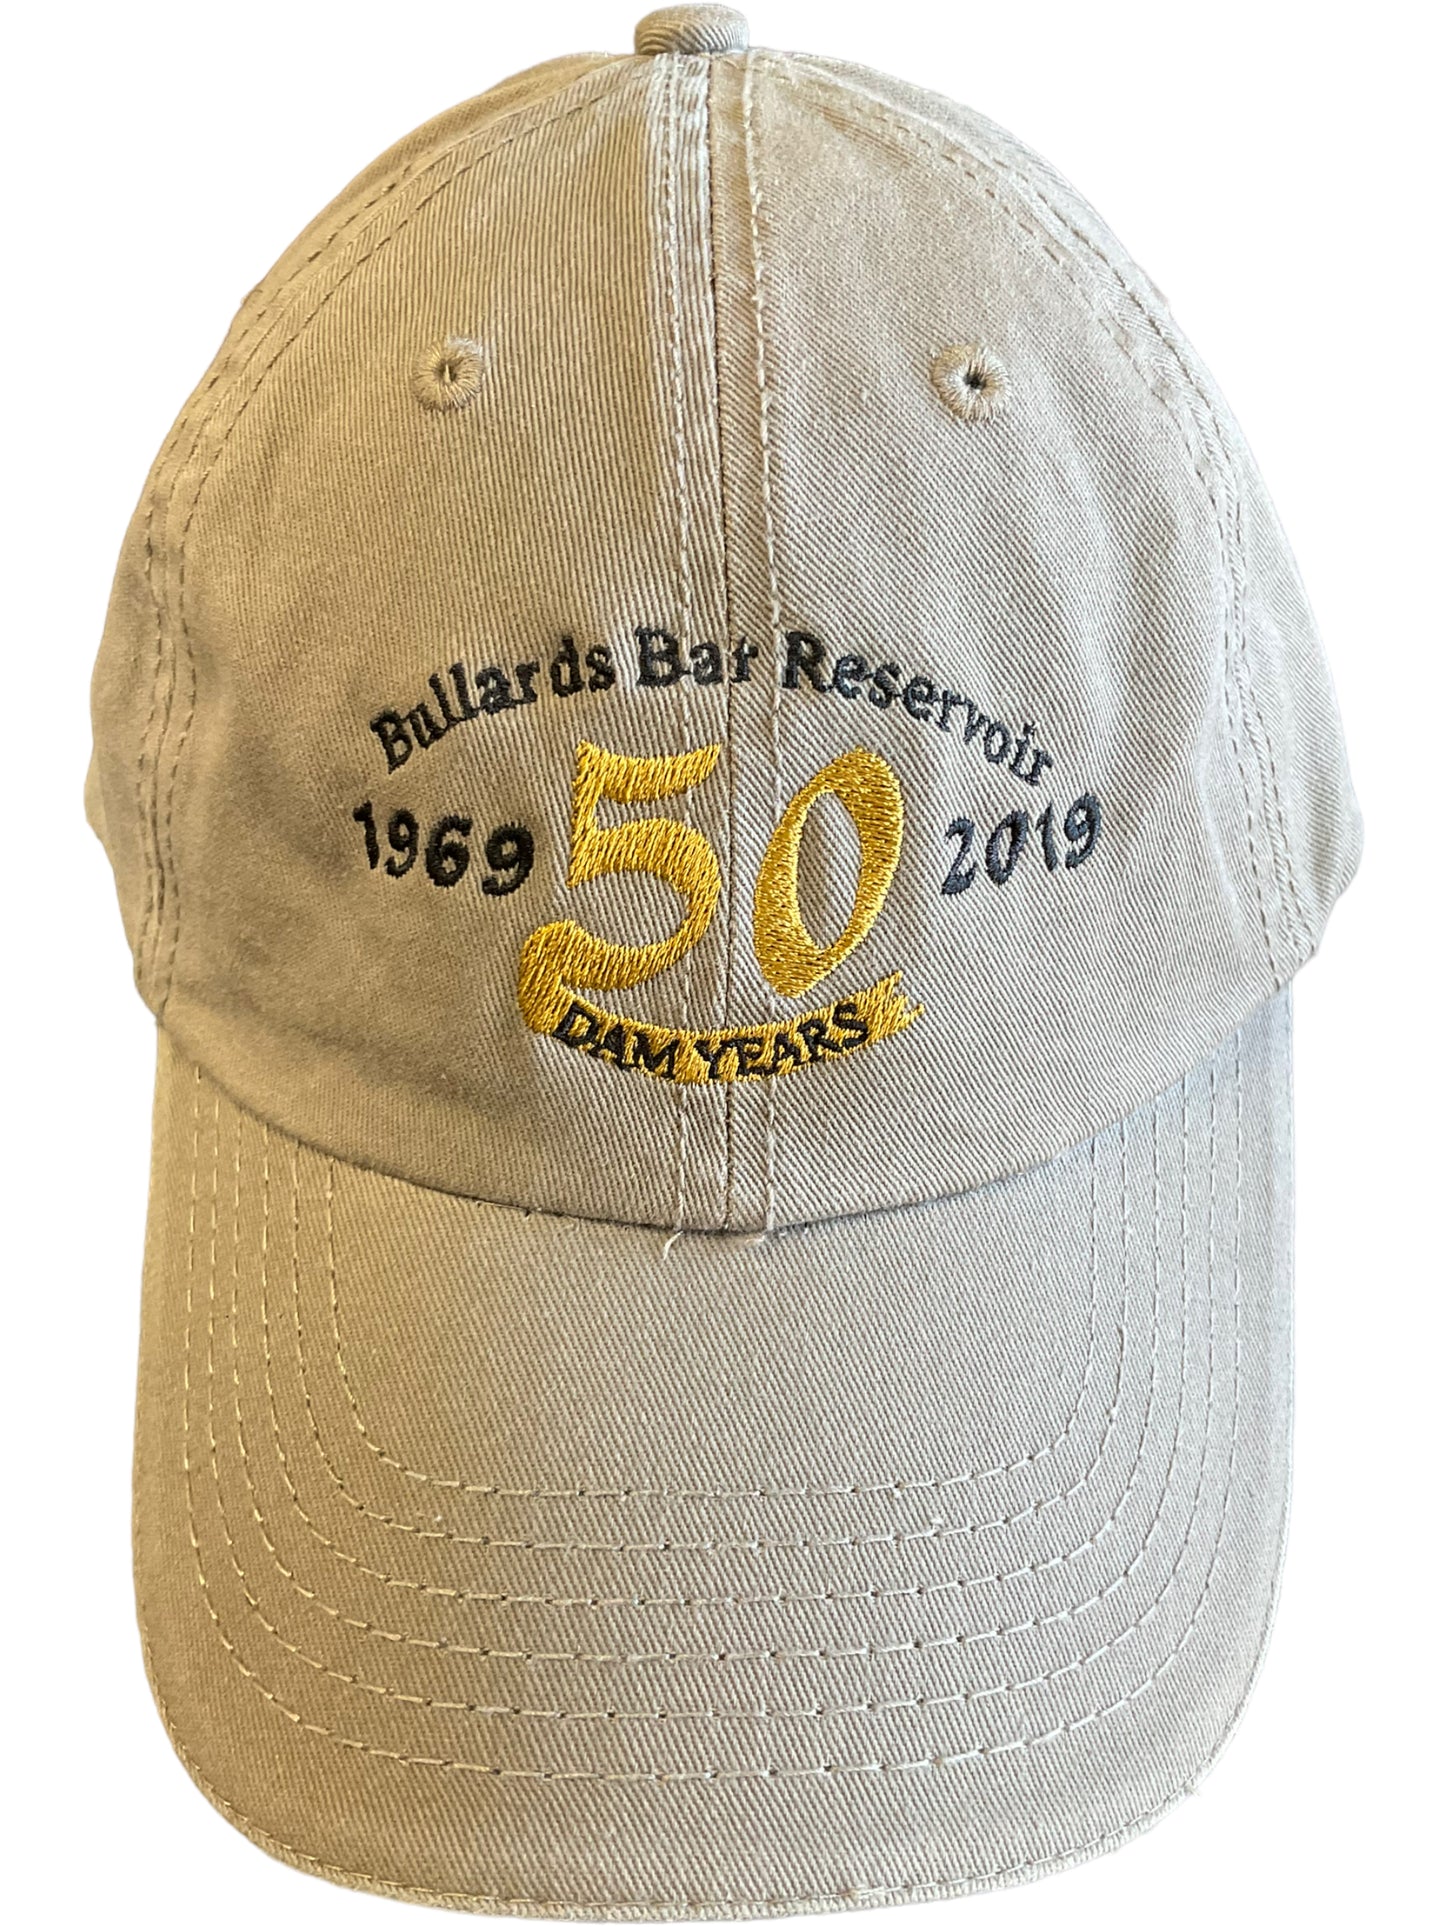 19 Hat 50th Anniversary (Curved Bill)